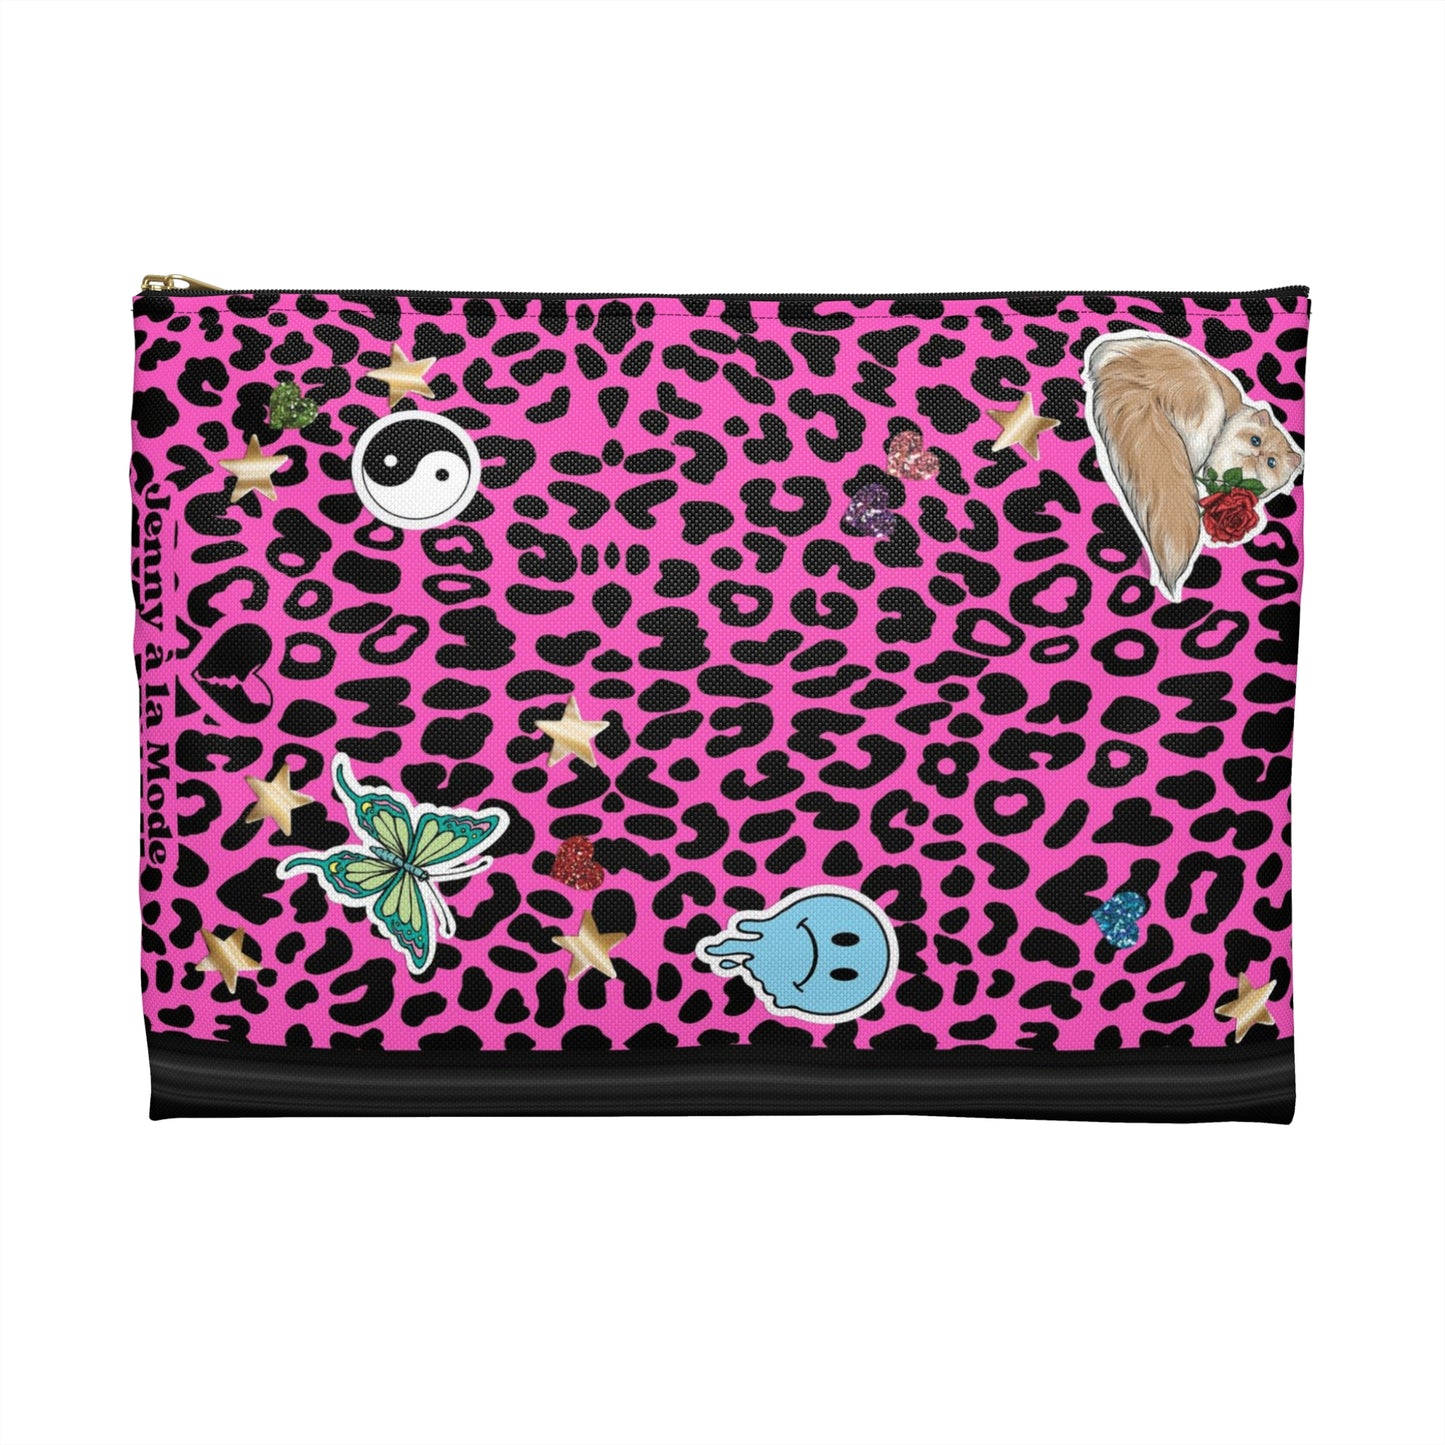 Leopard 90s Composition Book Pouch - Pink